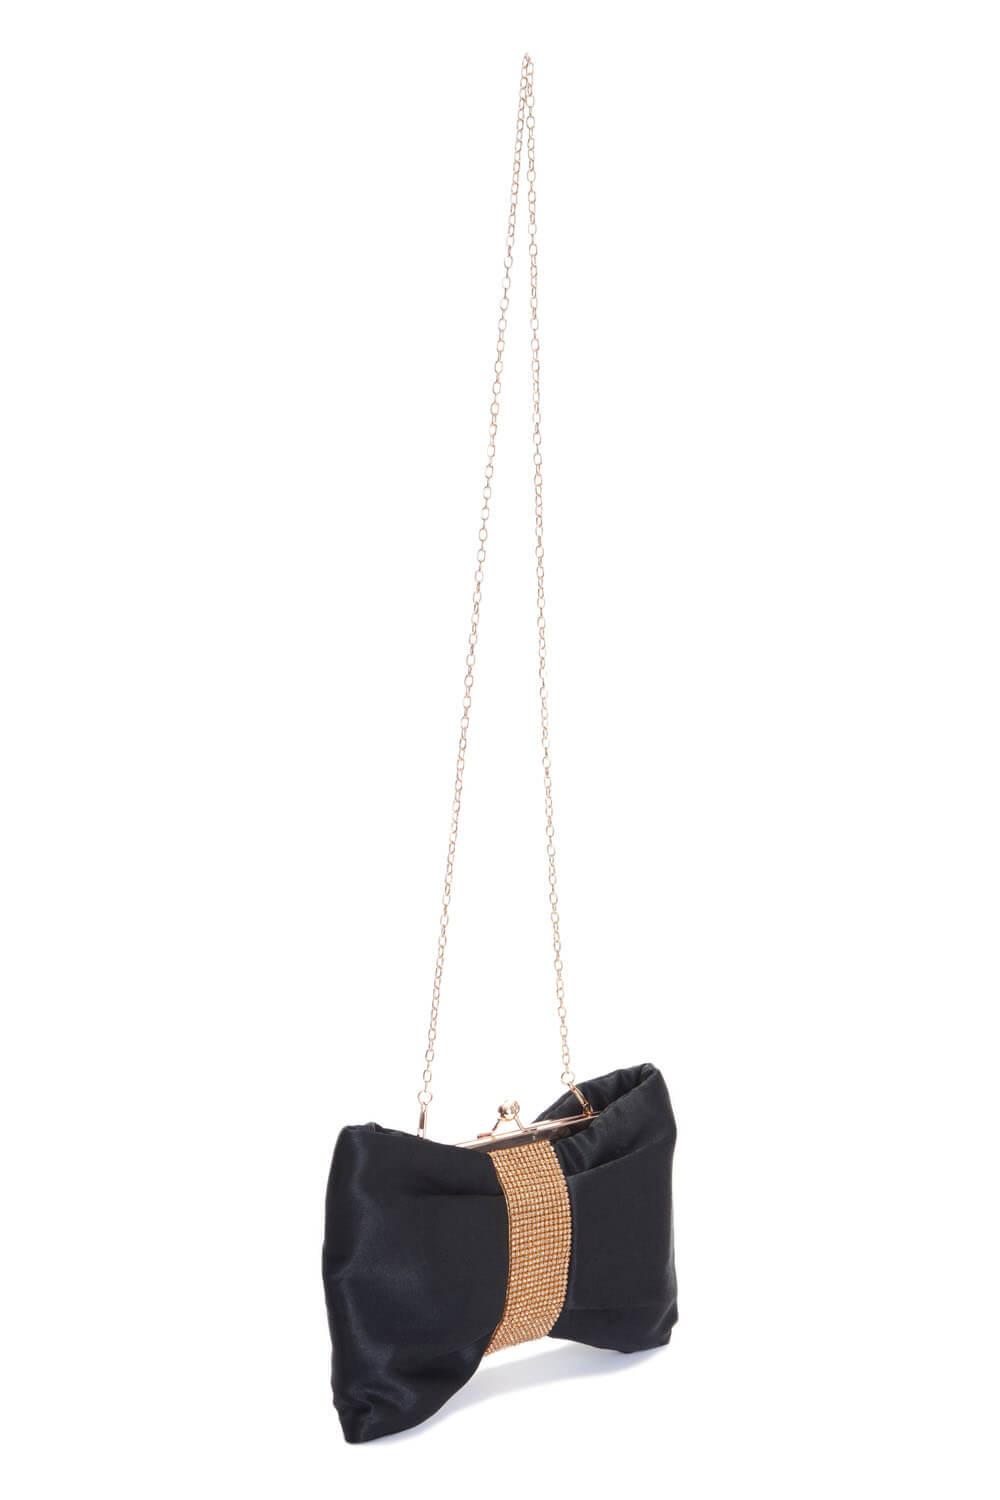 Black Diamante Embellished Bow Clutch Bag, Image 3 of 4